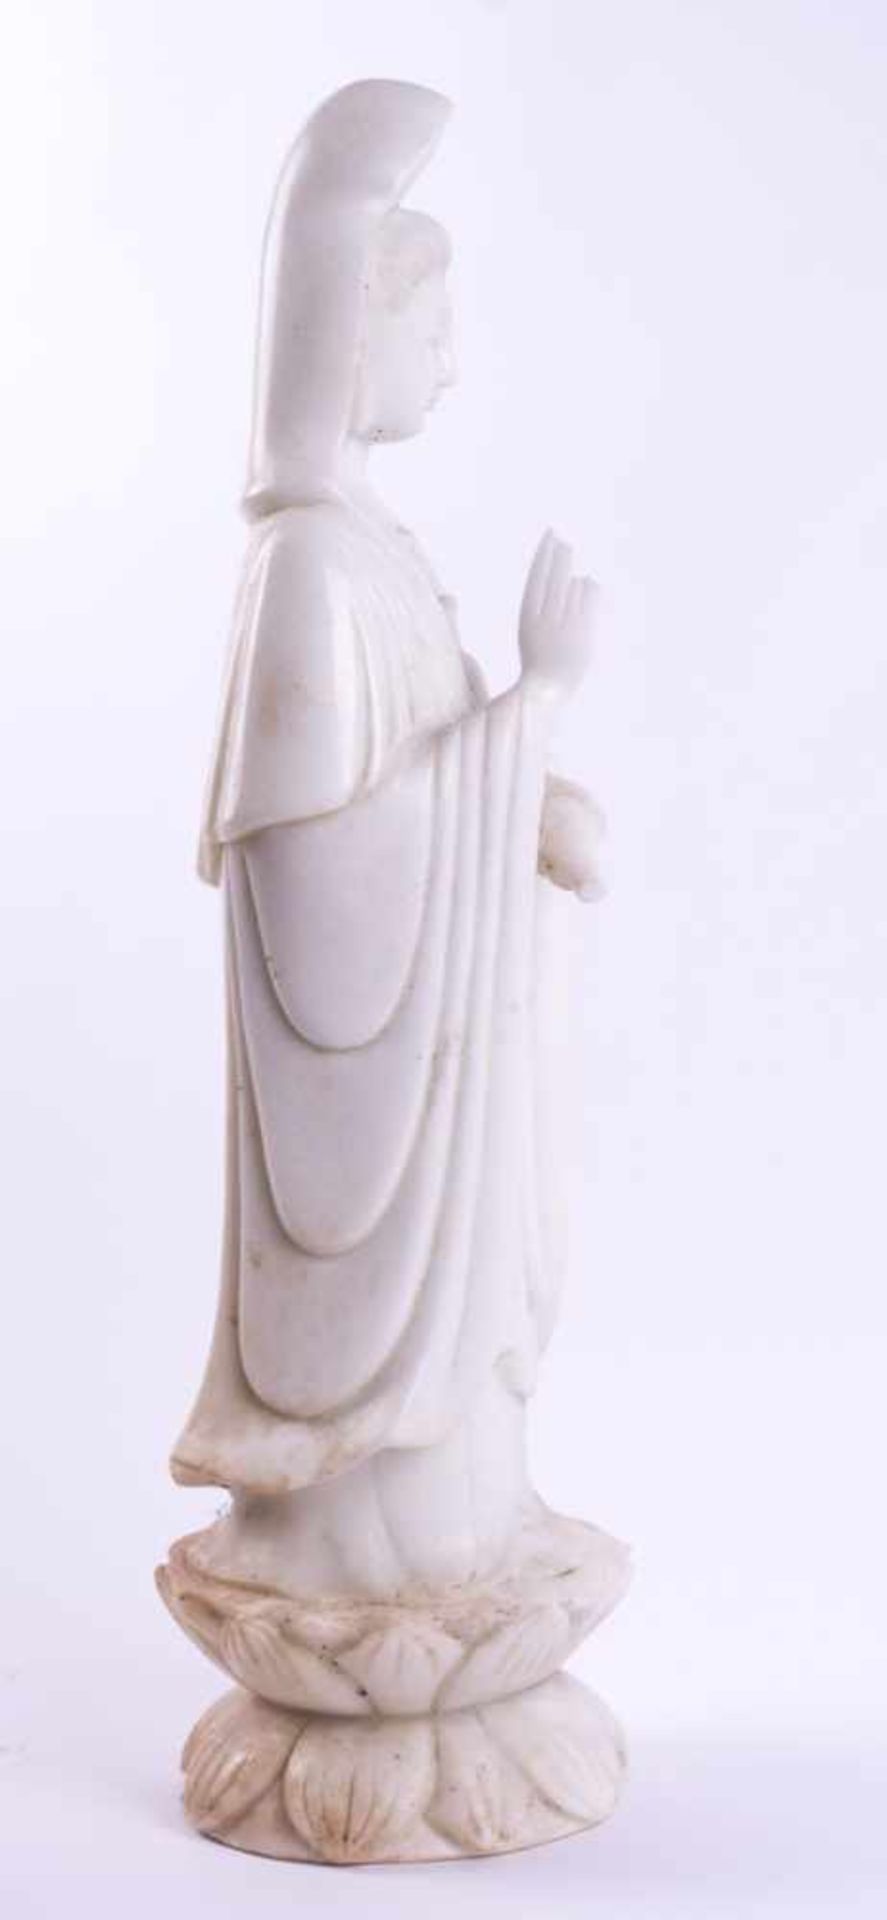 Guyniyn, China 19./20. Jhd.Marmor, Unikat, Finger der linken Hand best., Gewicht ca. 30 kg., H: 73 - Image 2 of 4